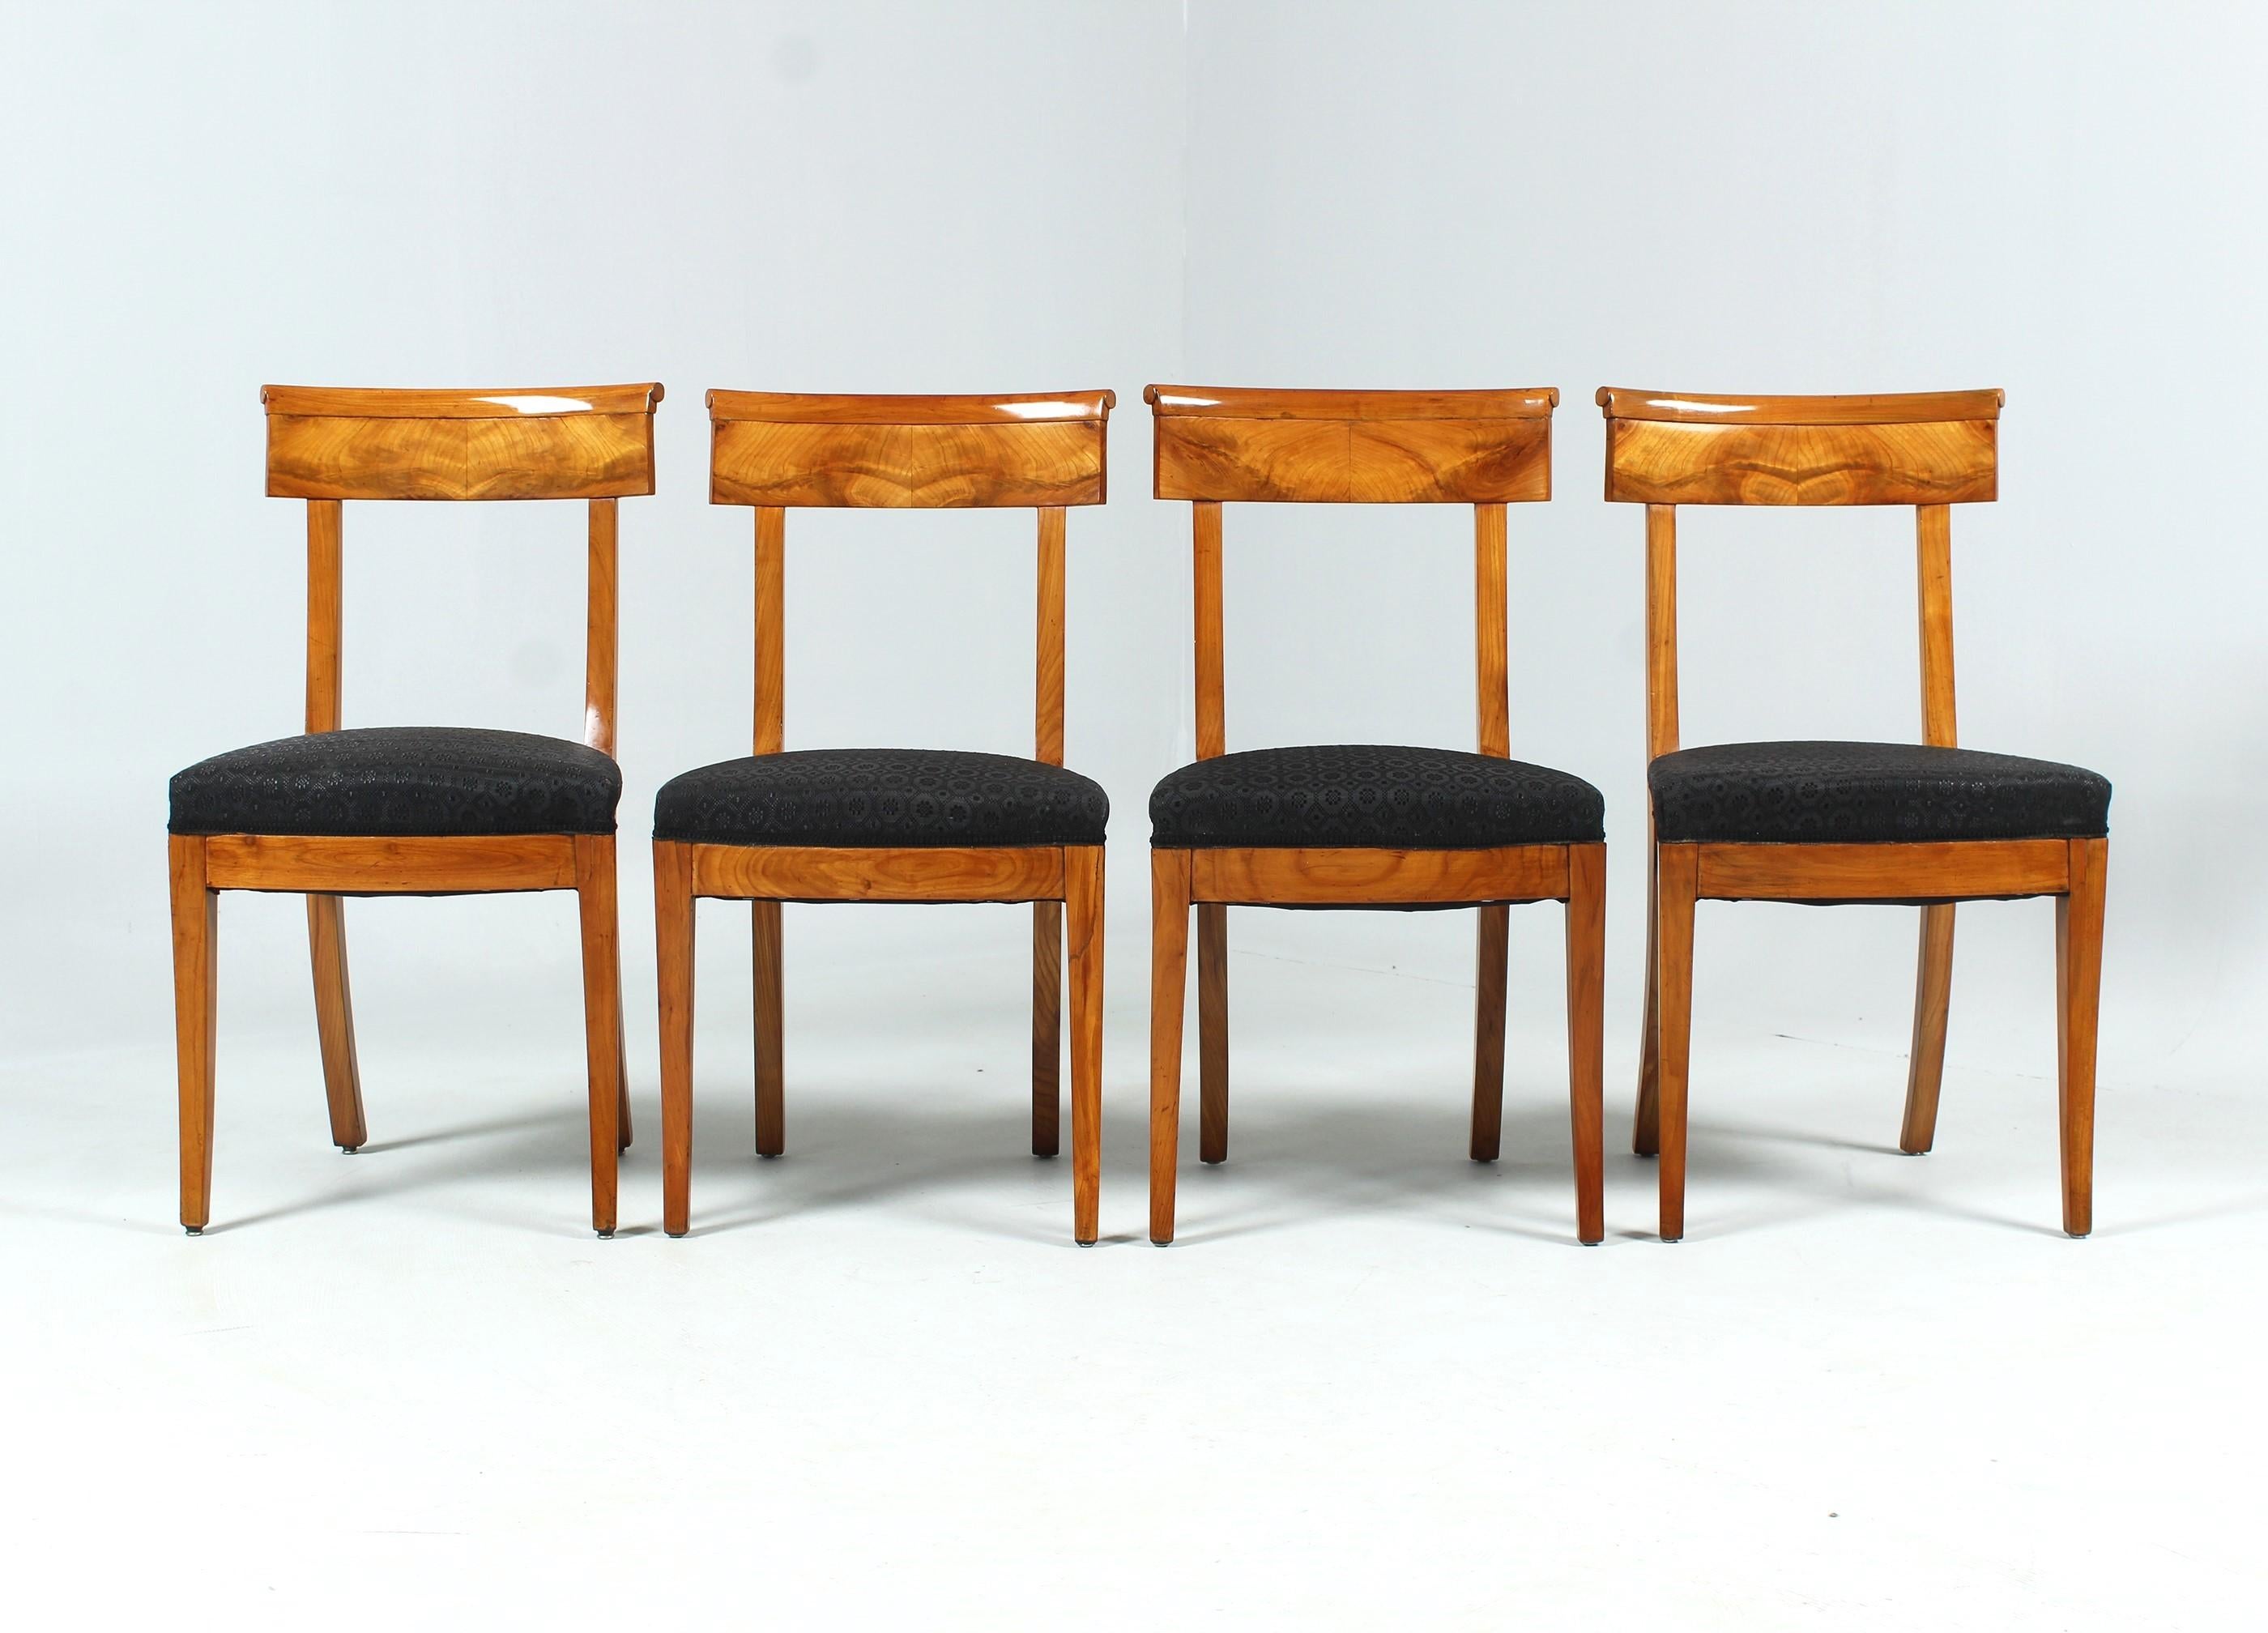 German Early 19th Century Biedermeier Chairs, Set of Eight, Cherrywood, Circa 1820 For Sale